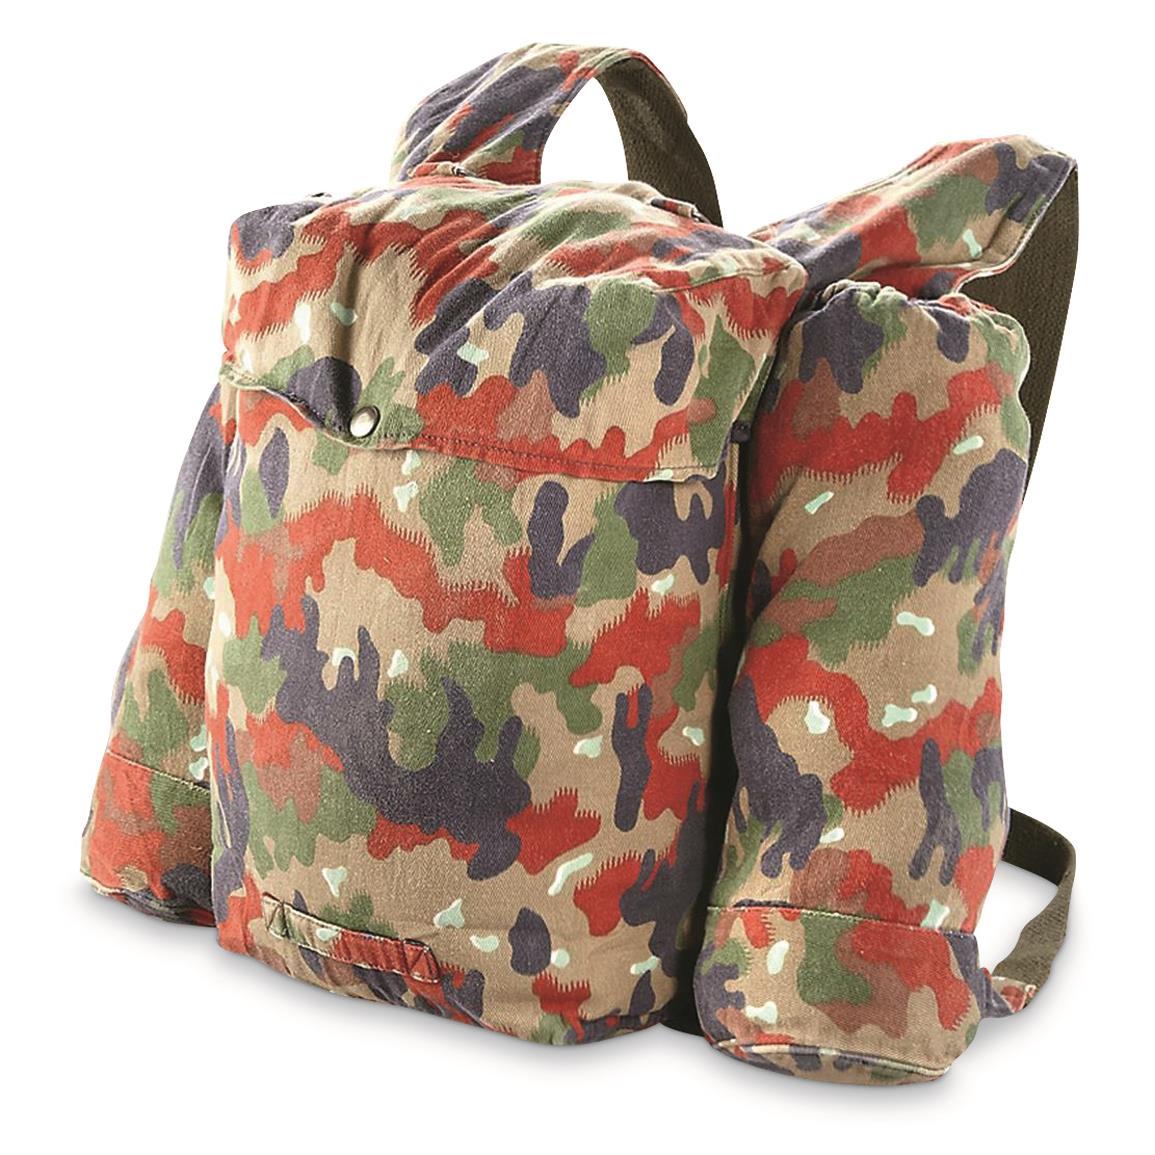 Swiss Military Surplus M70 Backpack, Used